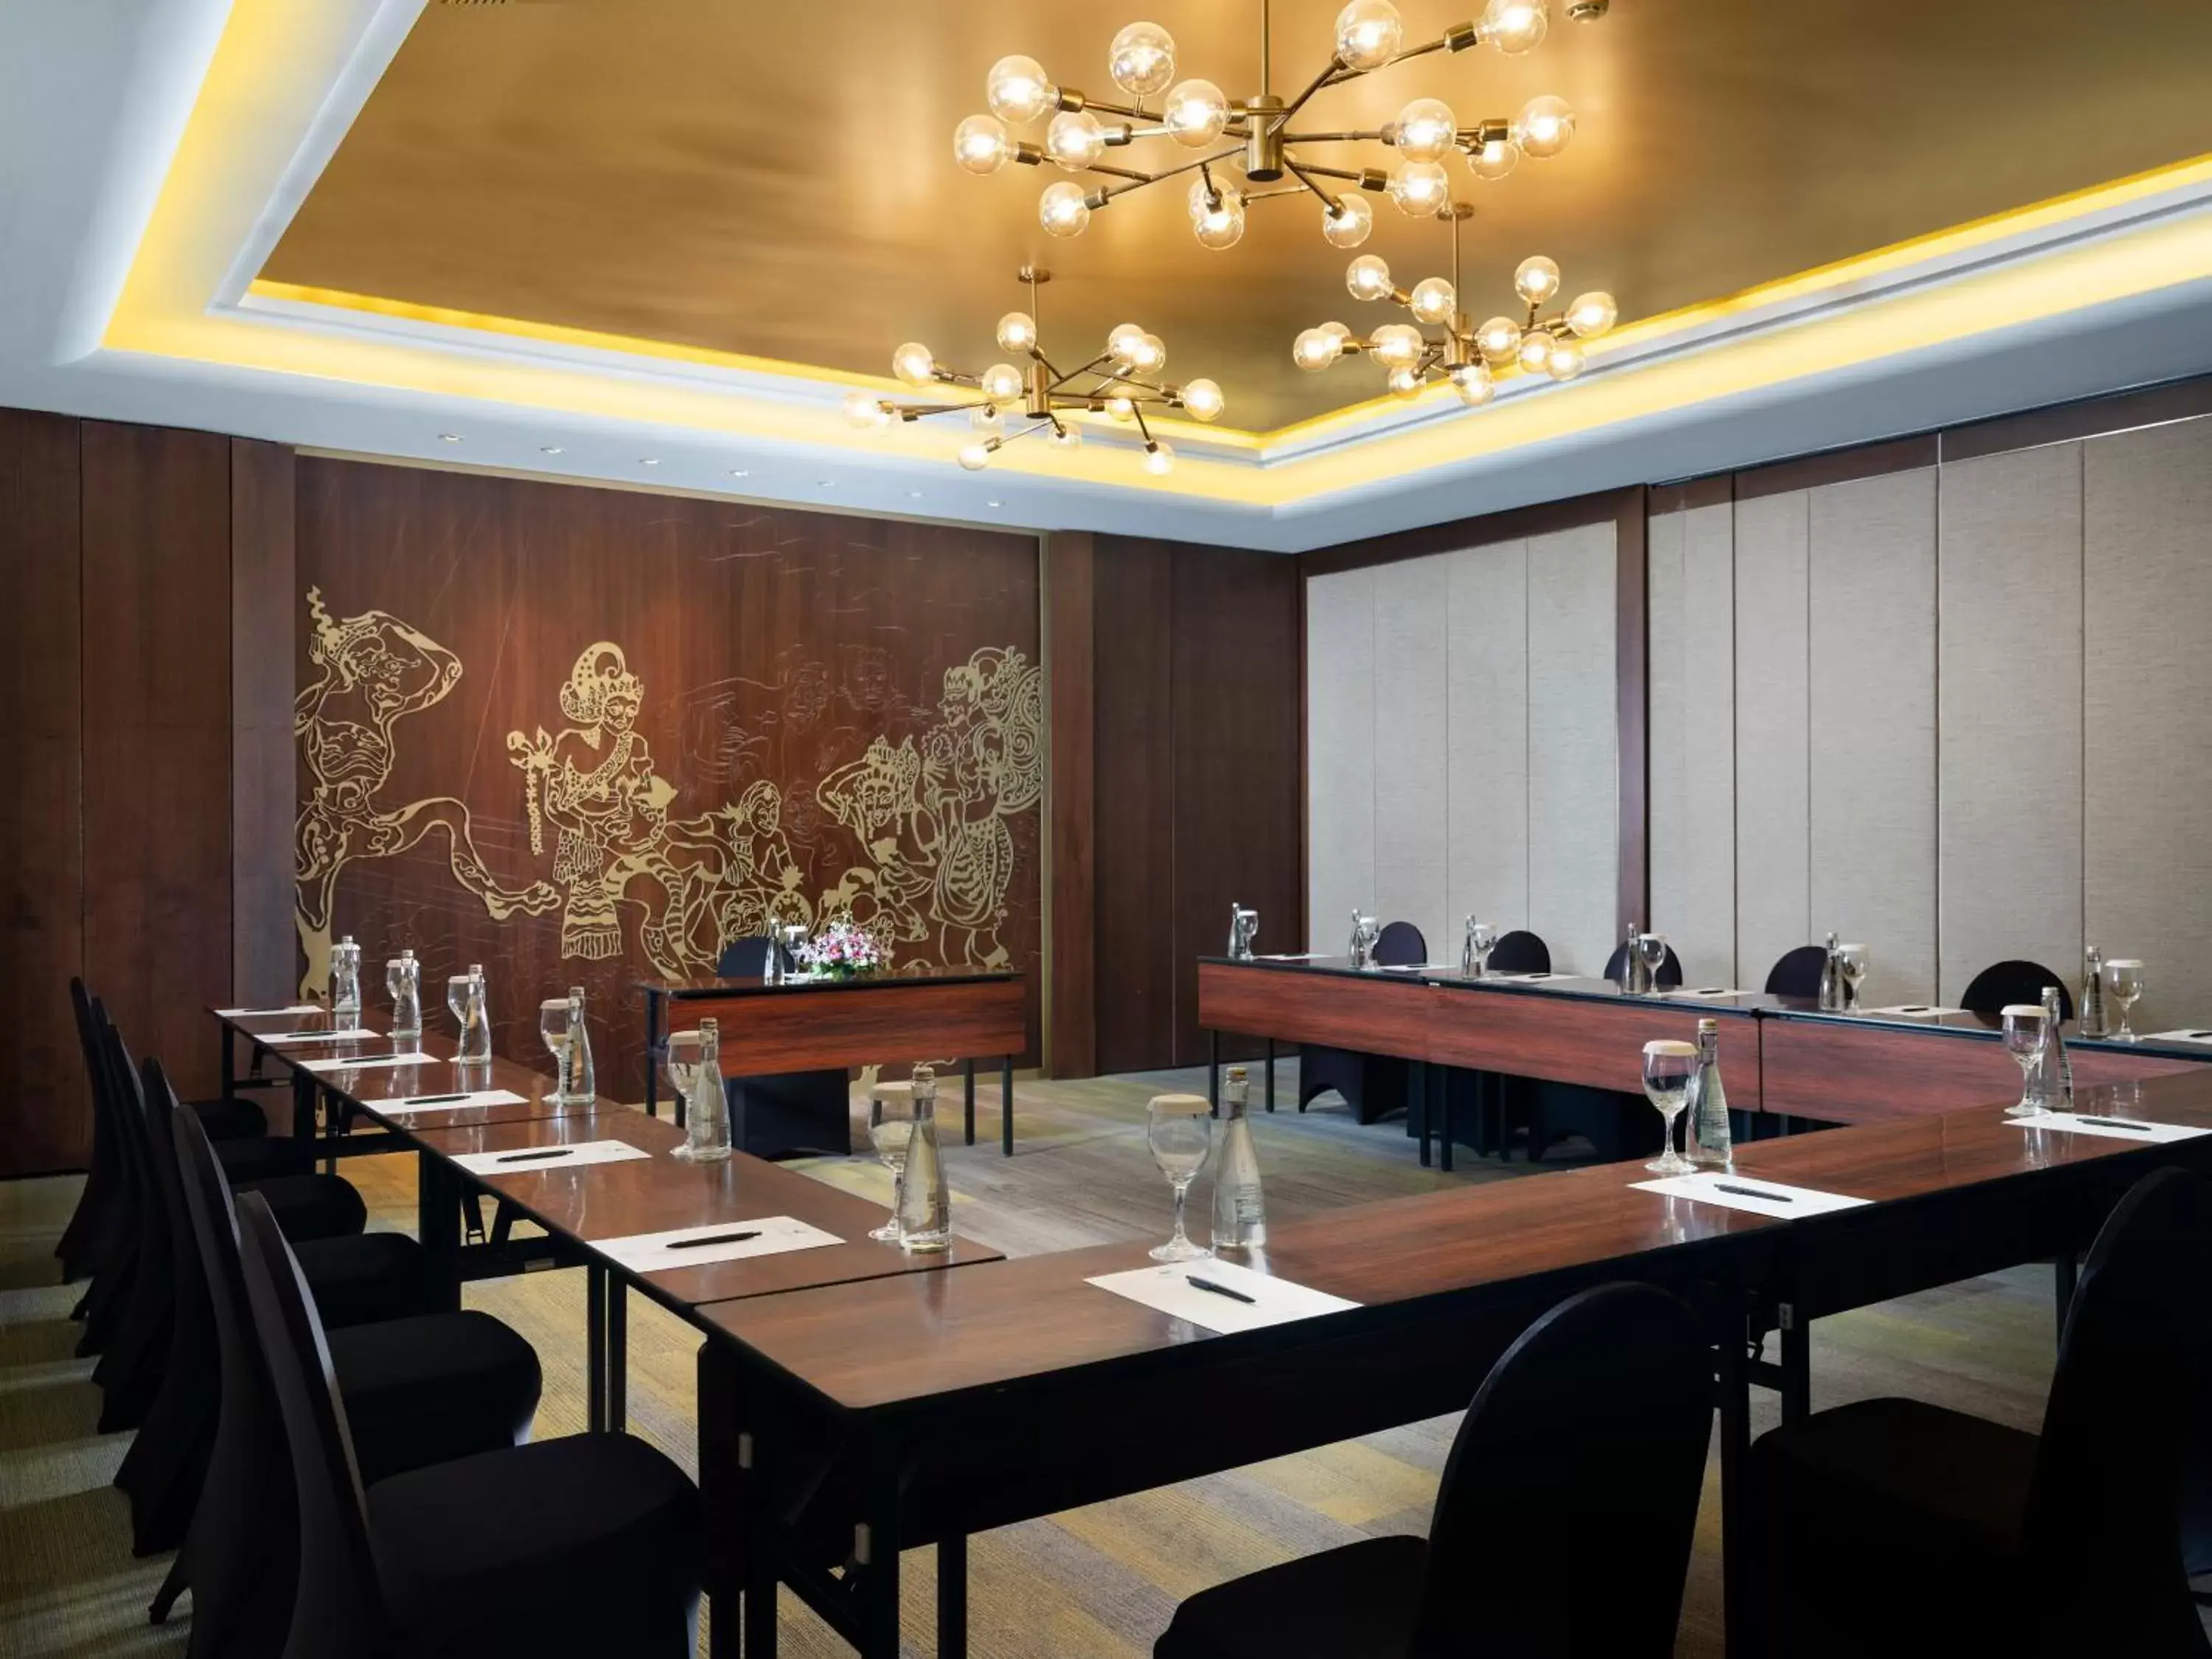 Meeting/conference room in Hotel Ciputra Semarang managed by Swiss-Belhotel International